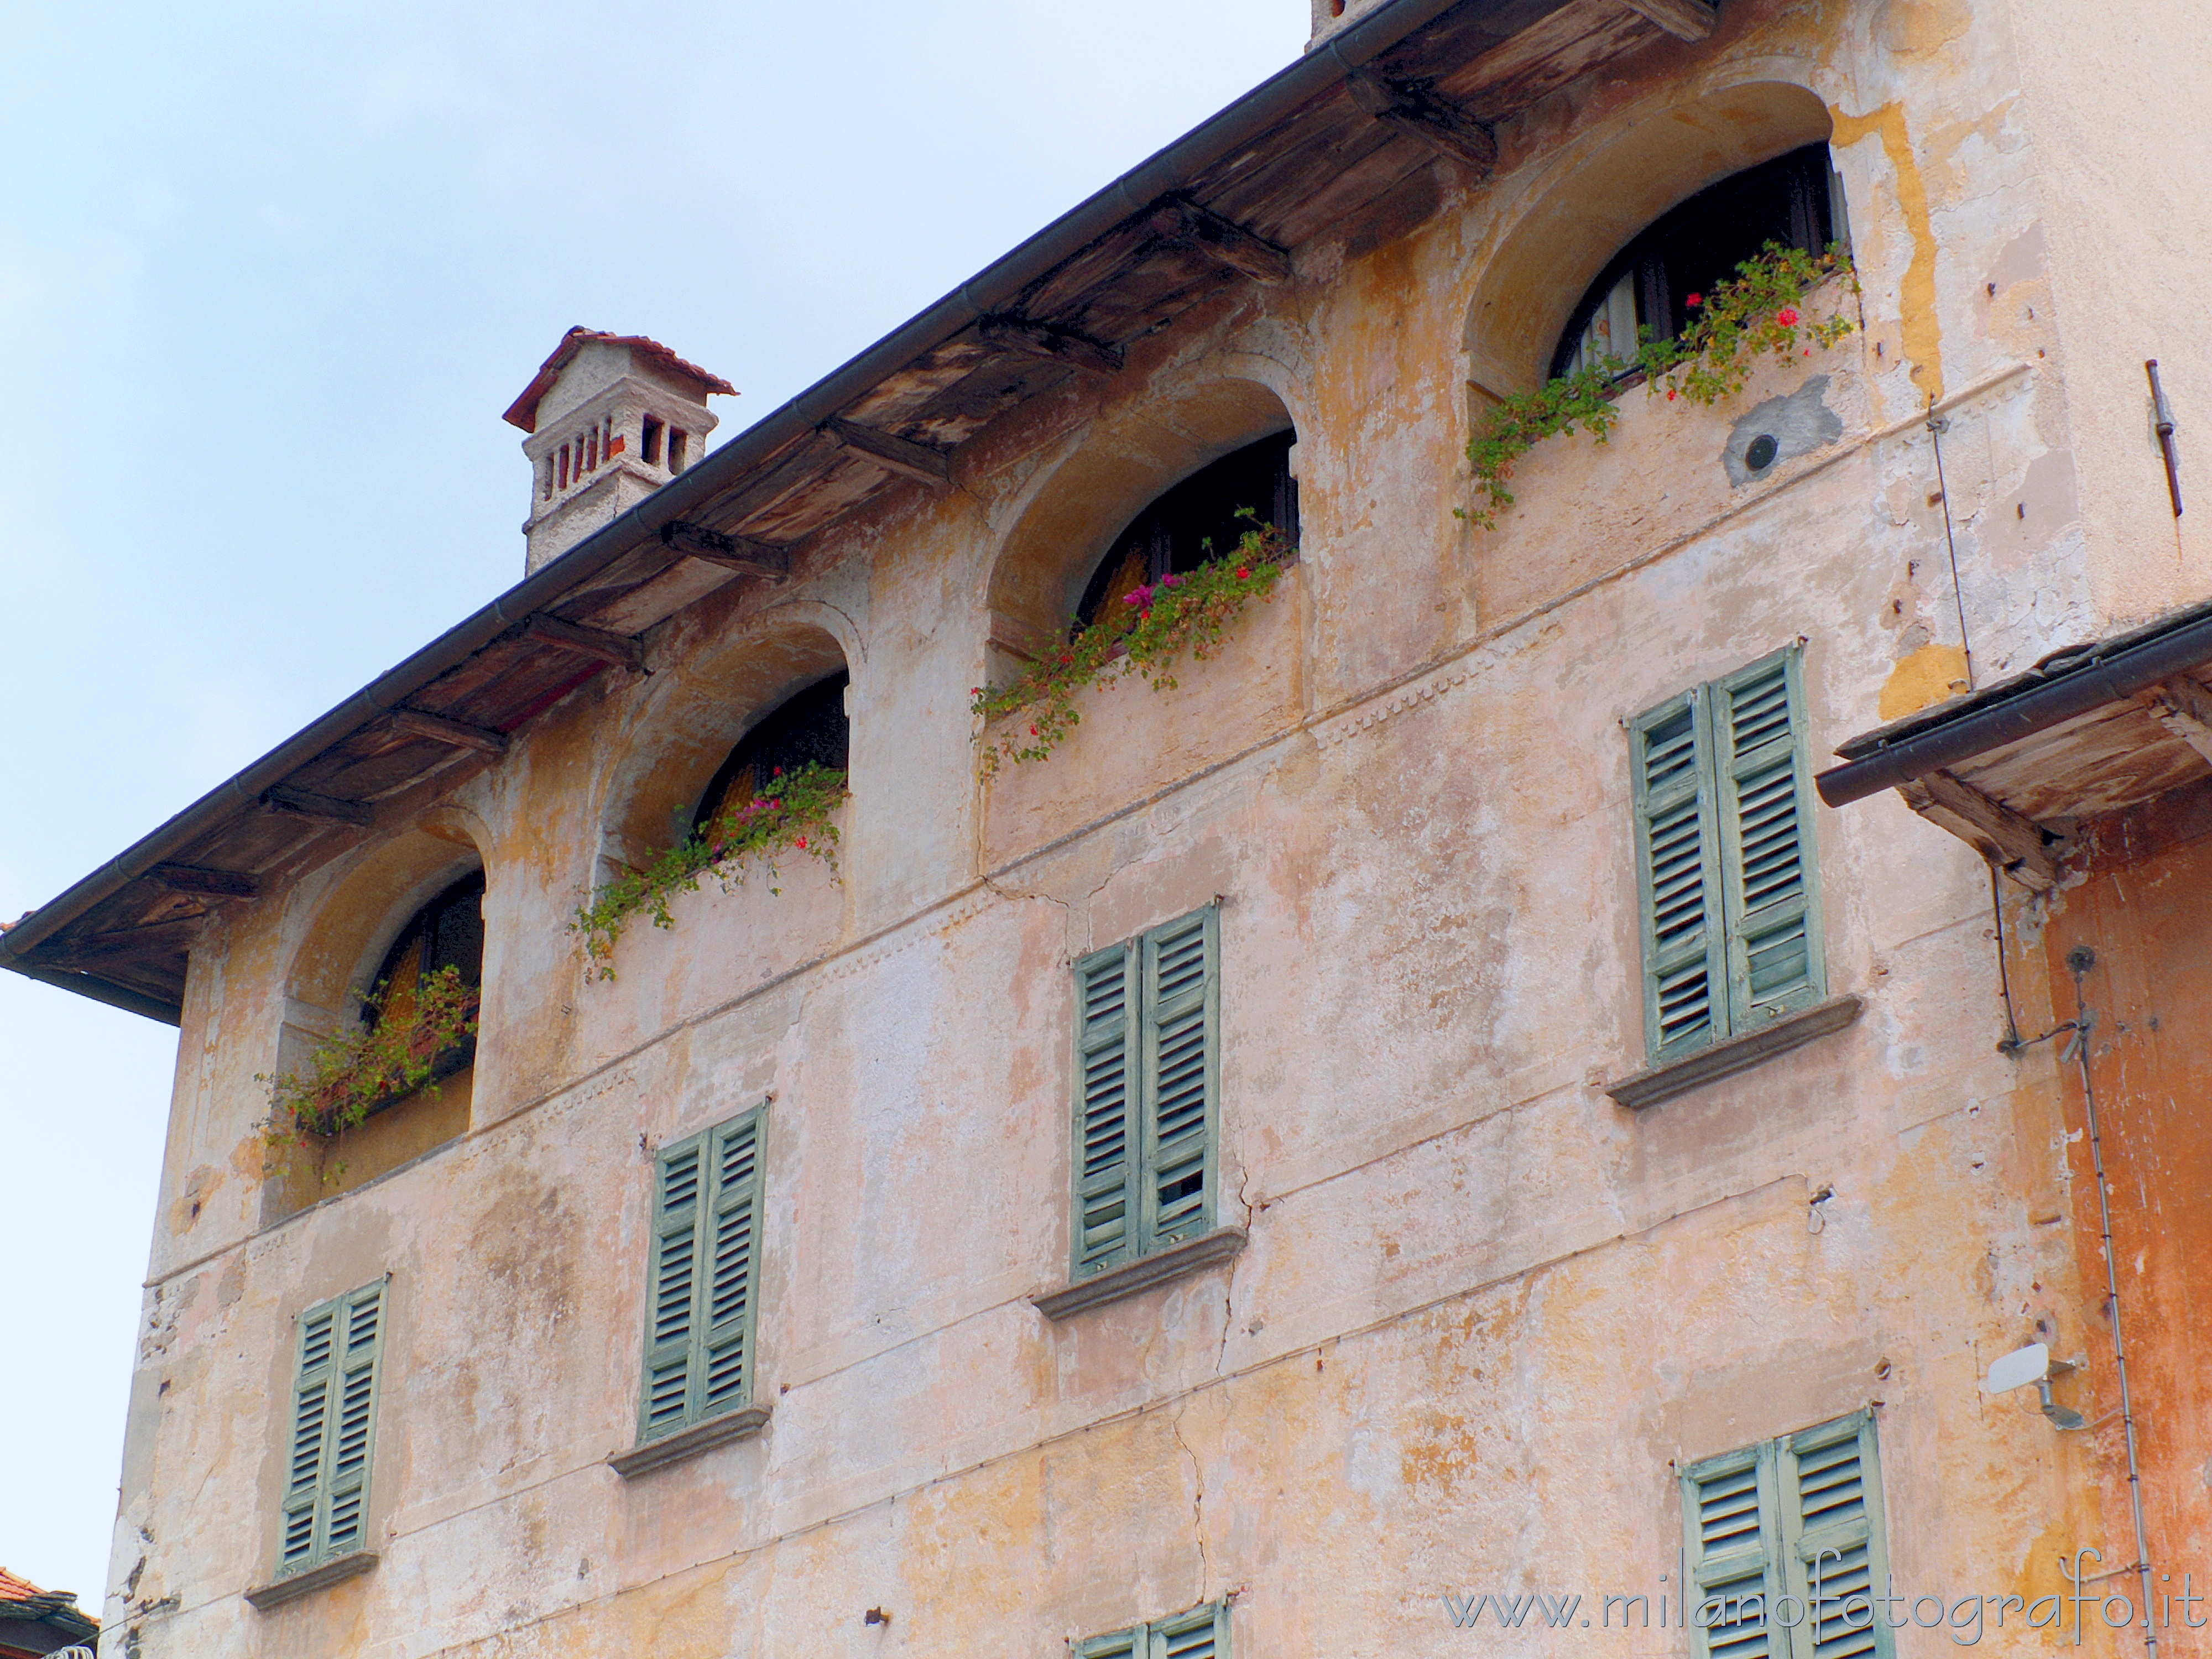 Orta San Giulio (Novara): Antica casa in piazza Mario Motta - Orta San Giulio (Novara)